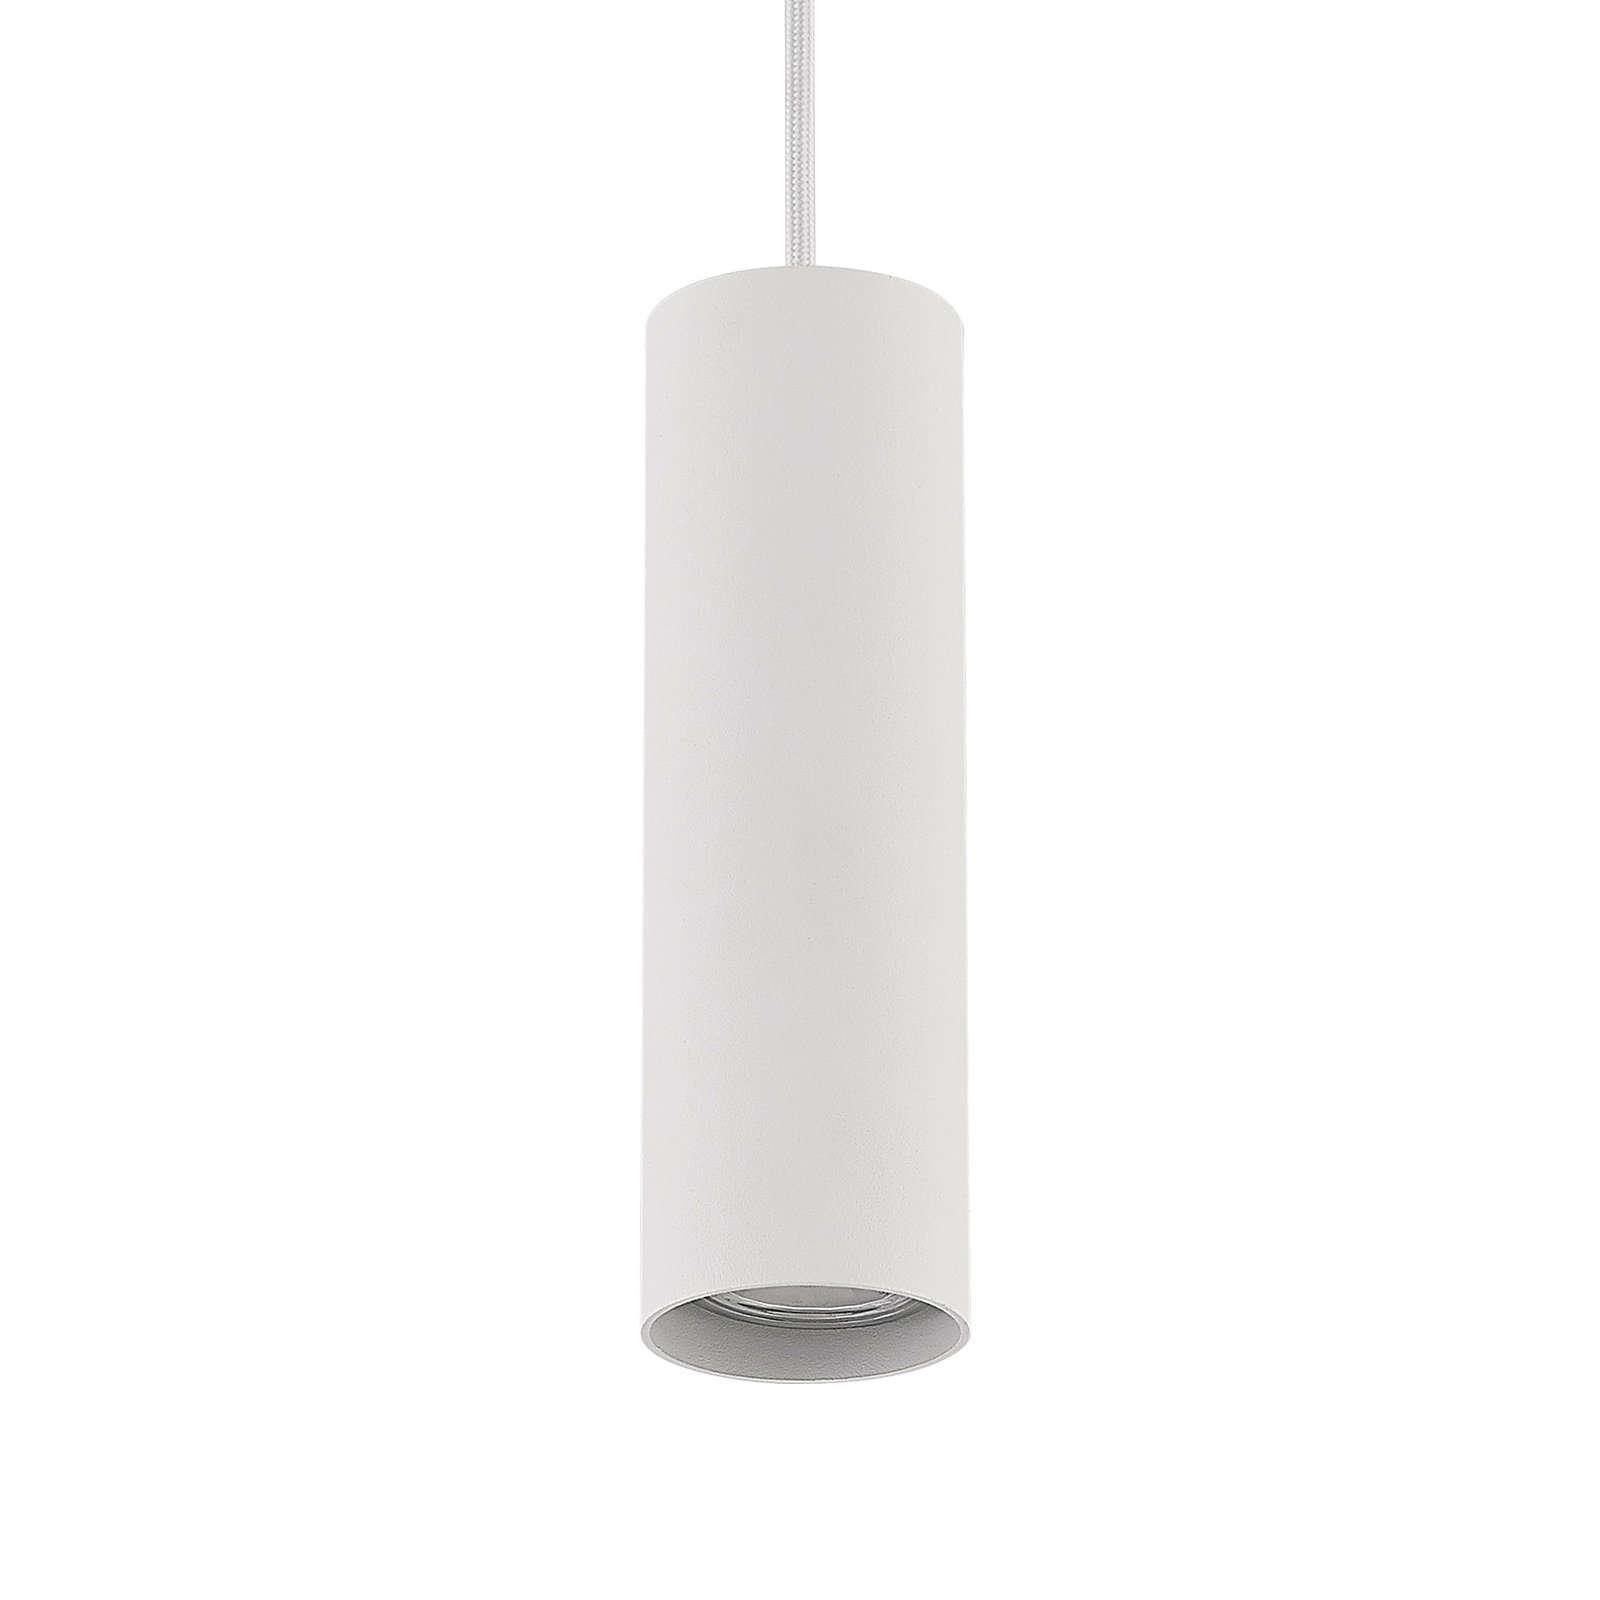 Lindby hanging light Linaro, 20 cm, white, 1-phase, Ø 6 cm